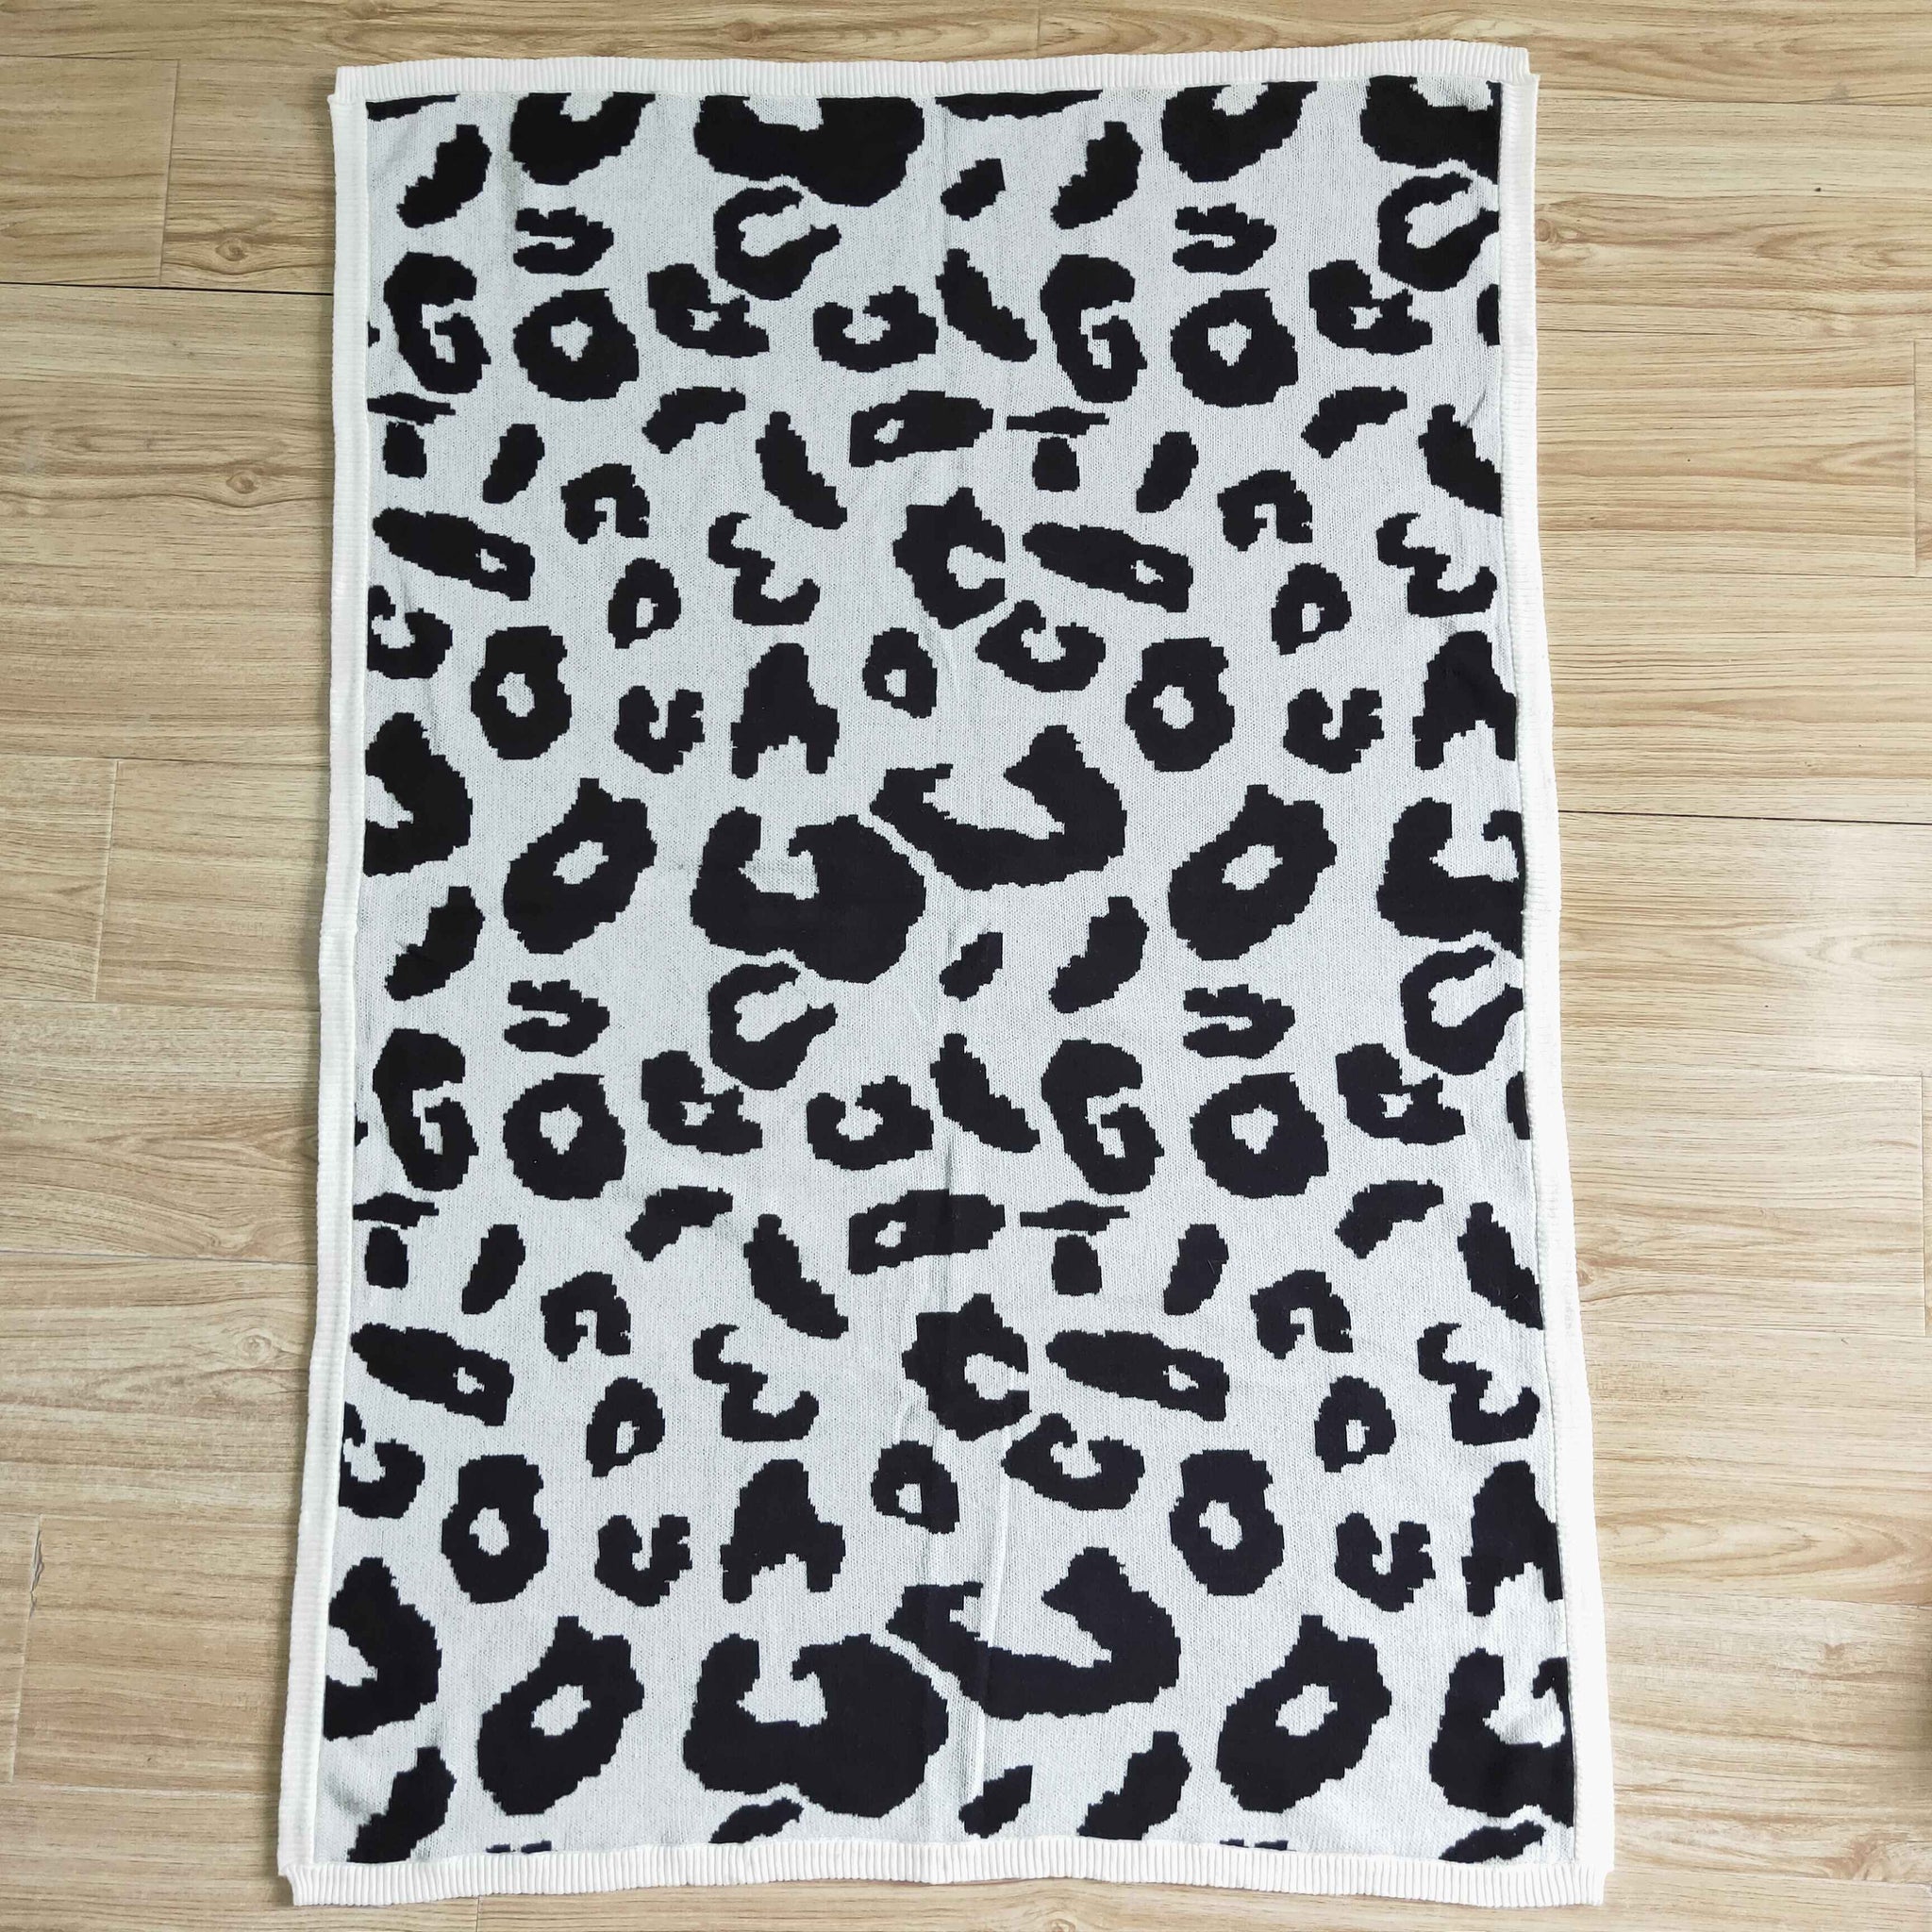 BL0023 Leopard Knit Blanket